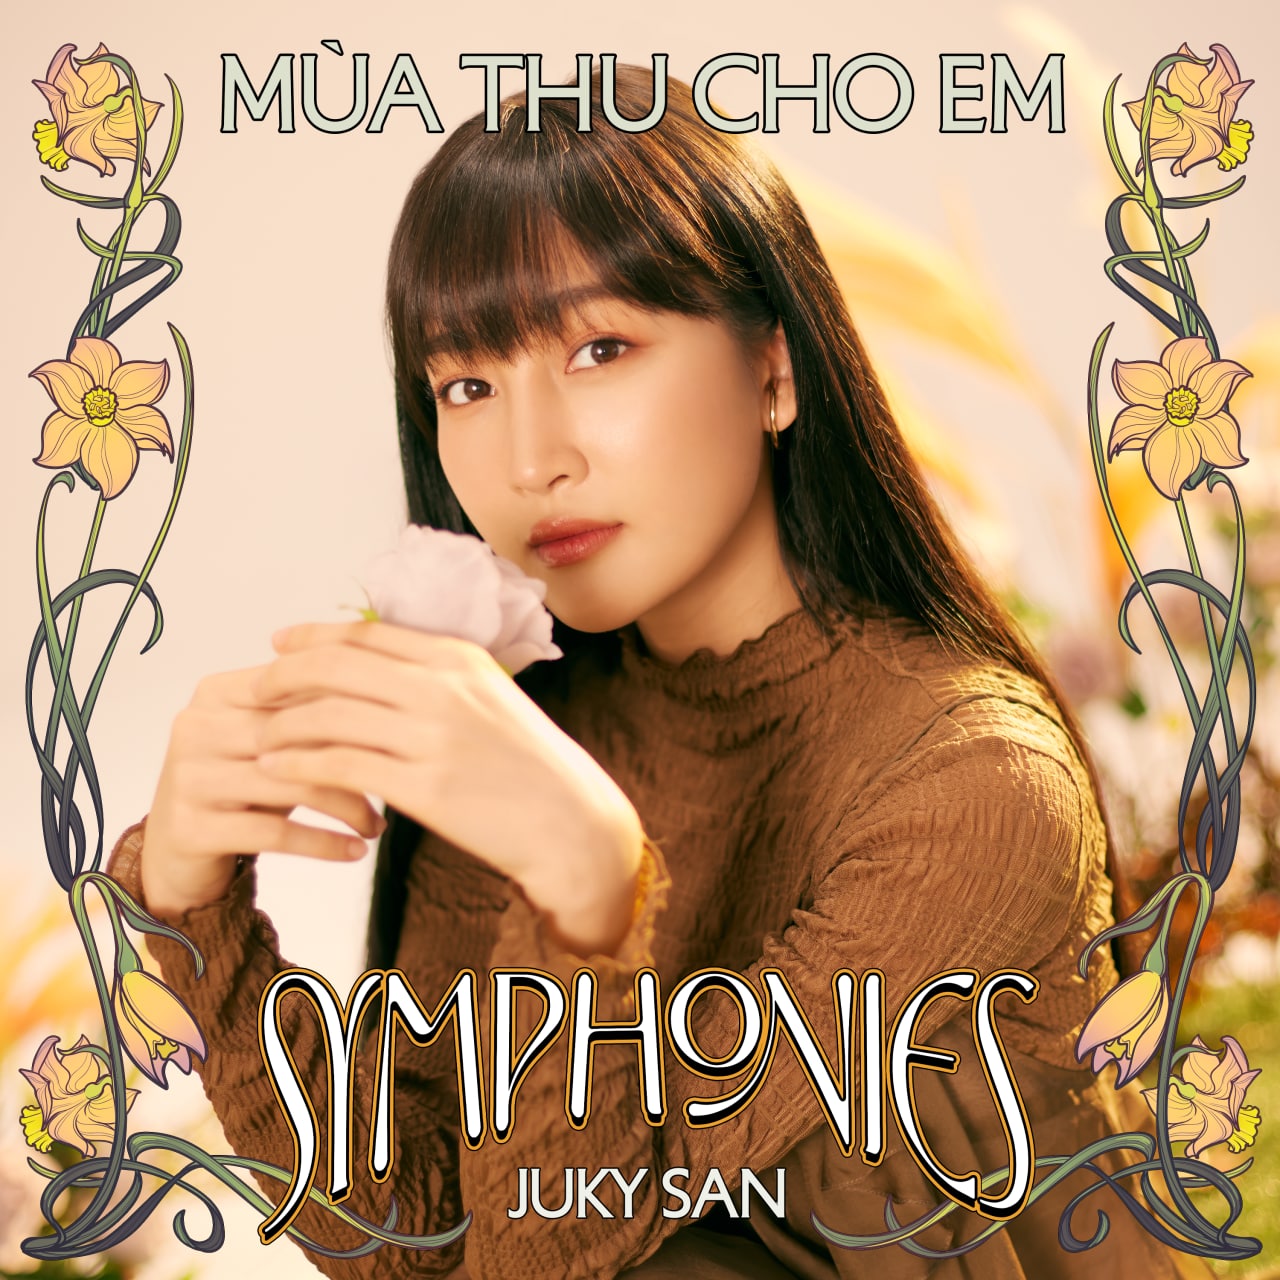 Juky San — Mùa Thu Cho Em cover artwork